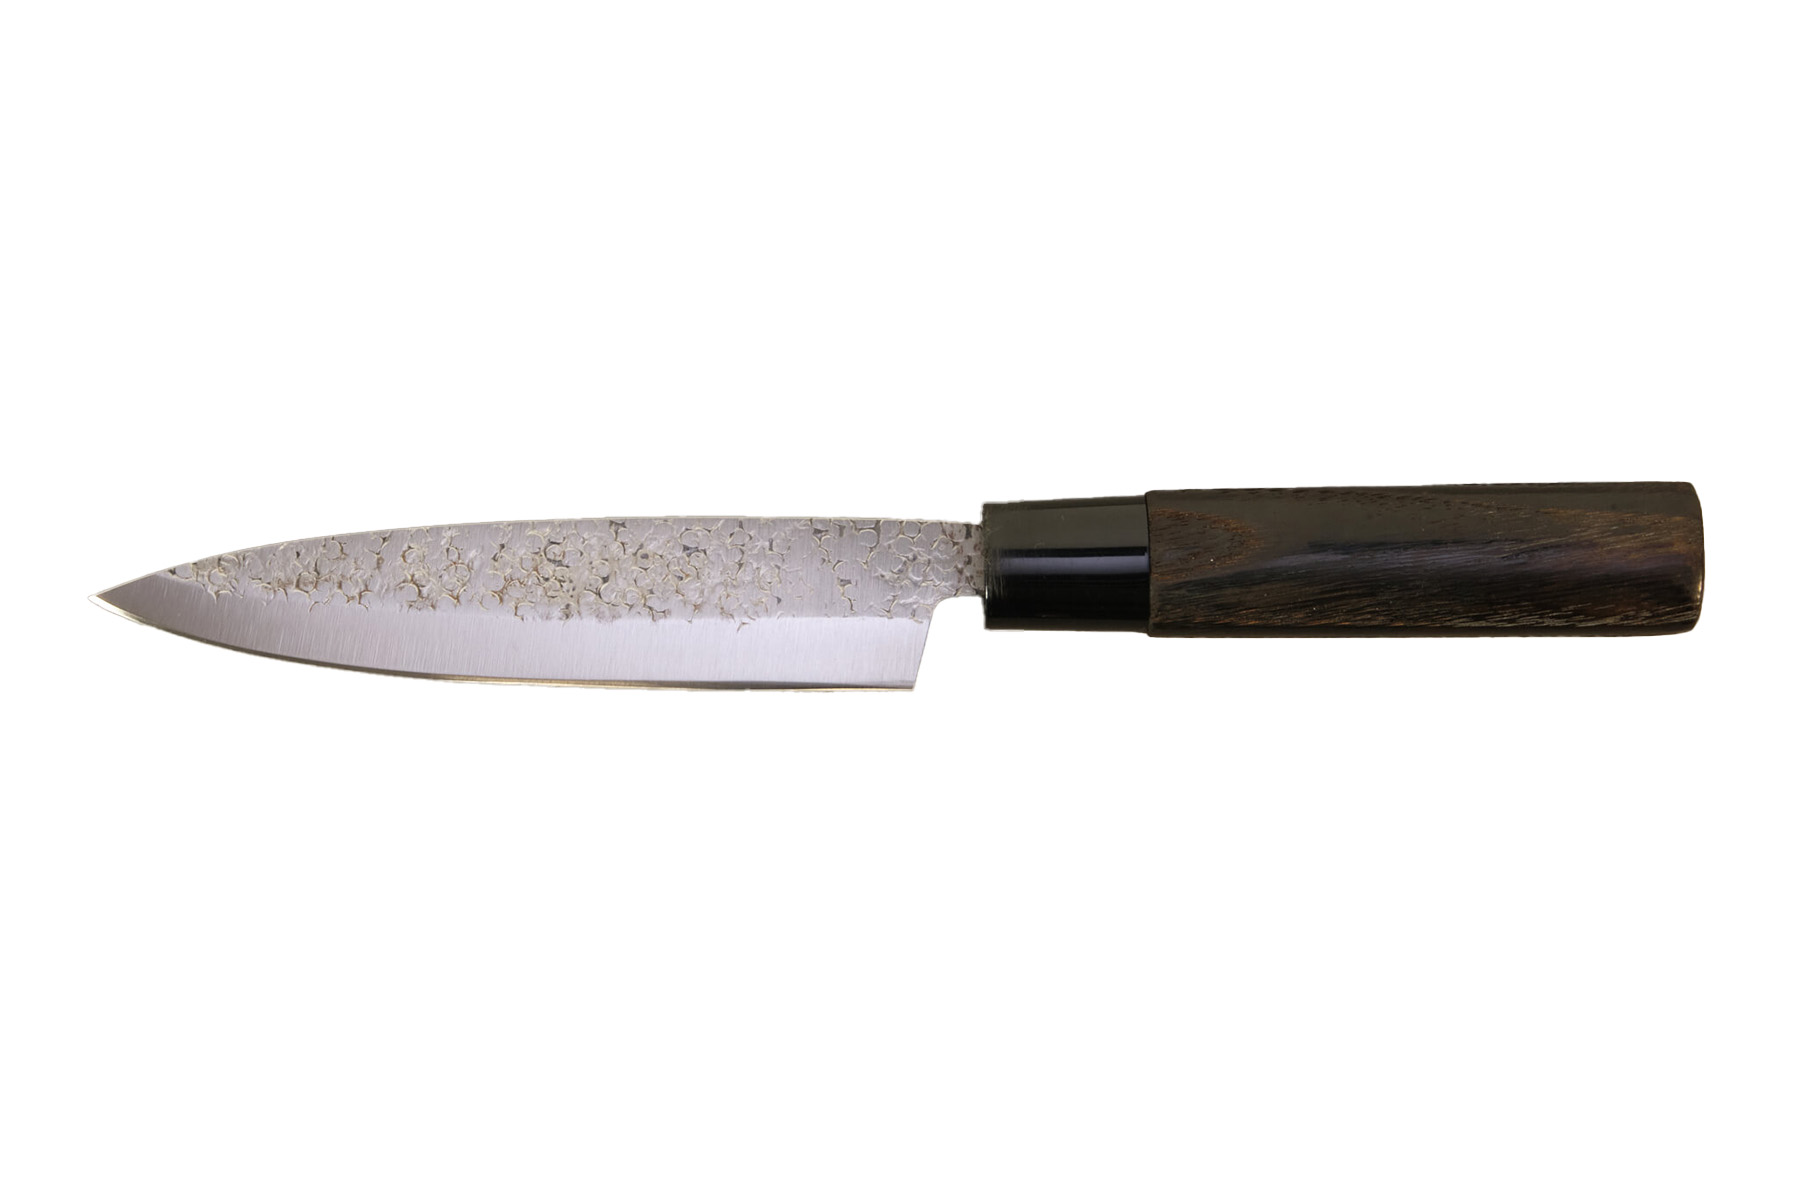 Couteau japonais Itto Ryu Hammered petty 12 cm